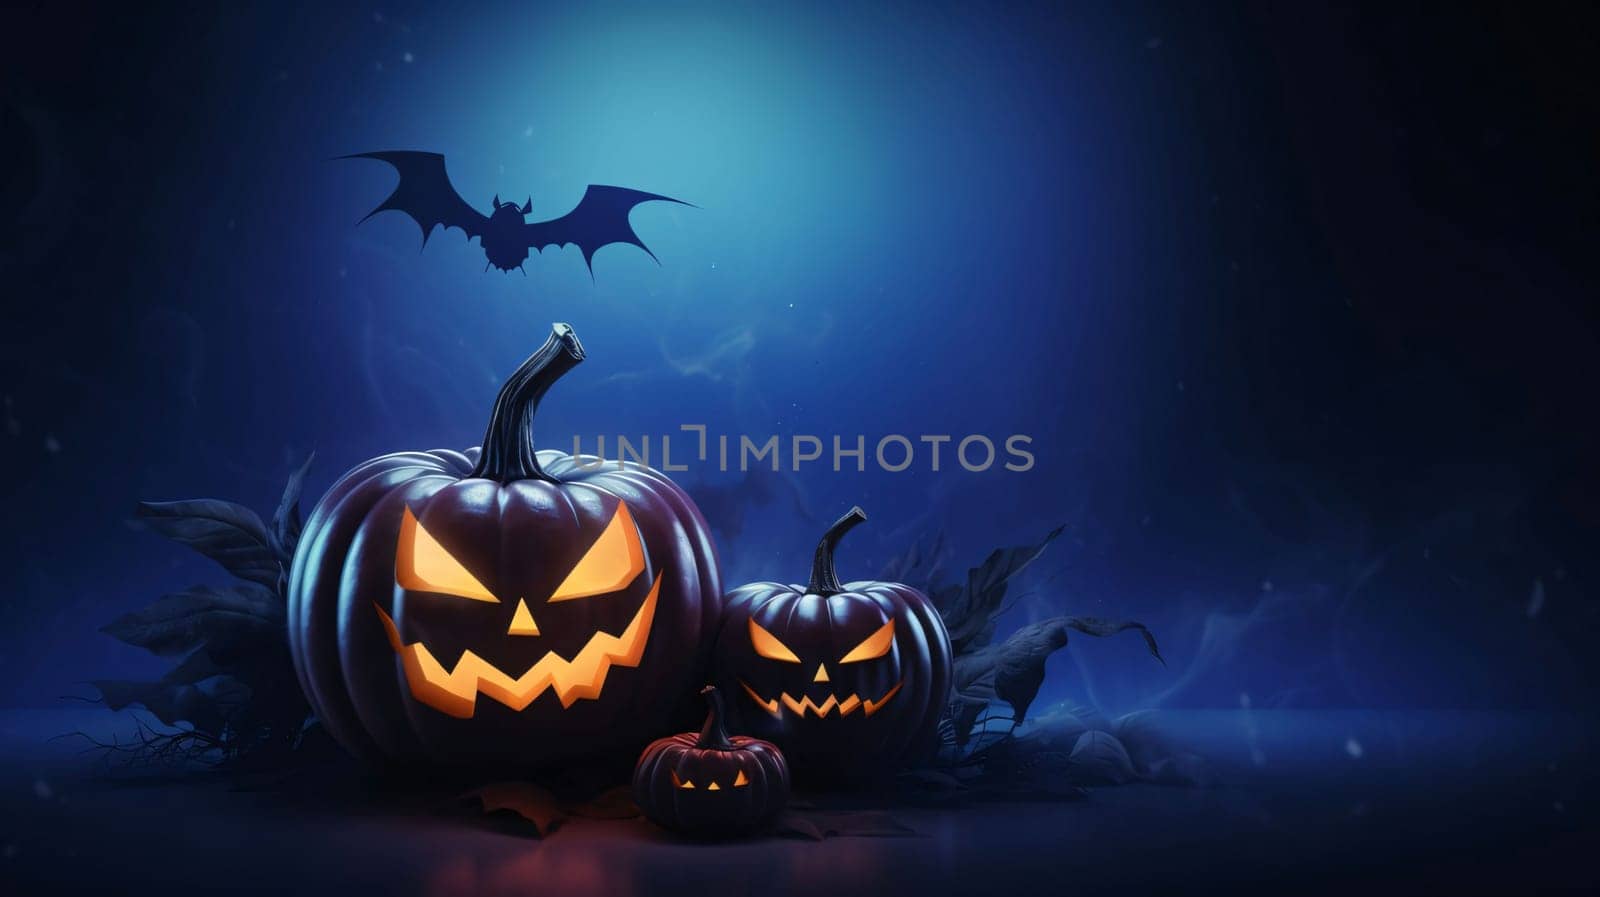 Banner: Halloween pumpkins and bats on dark background, 3d render